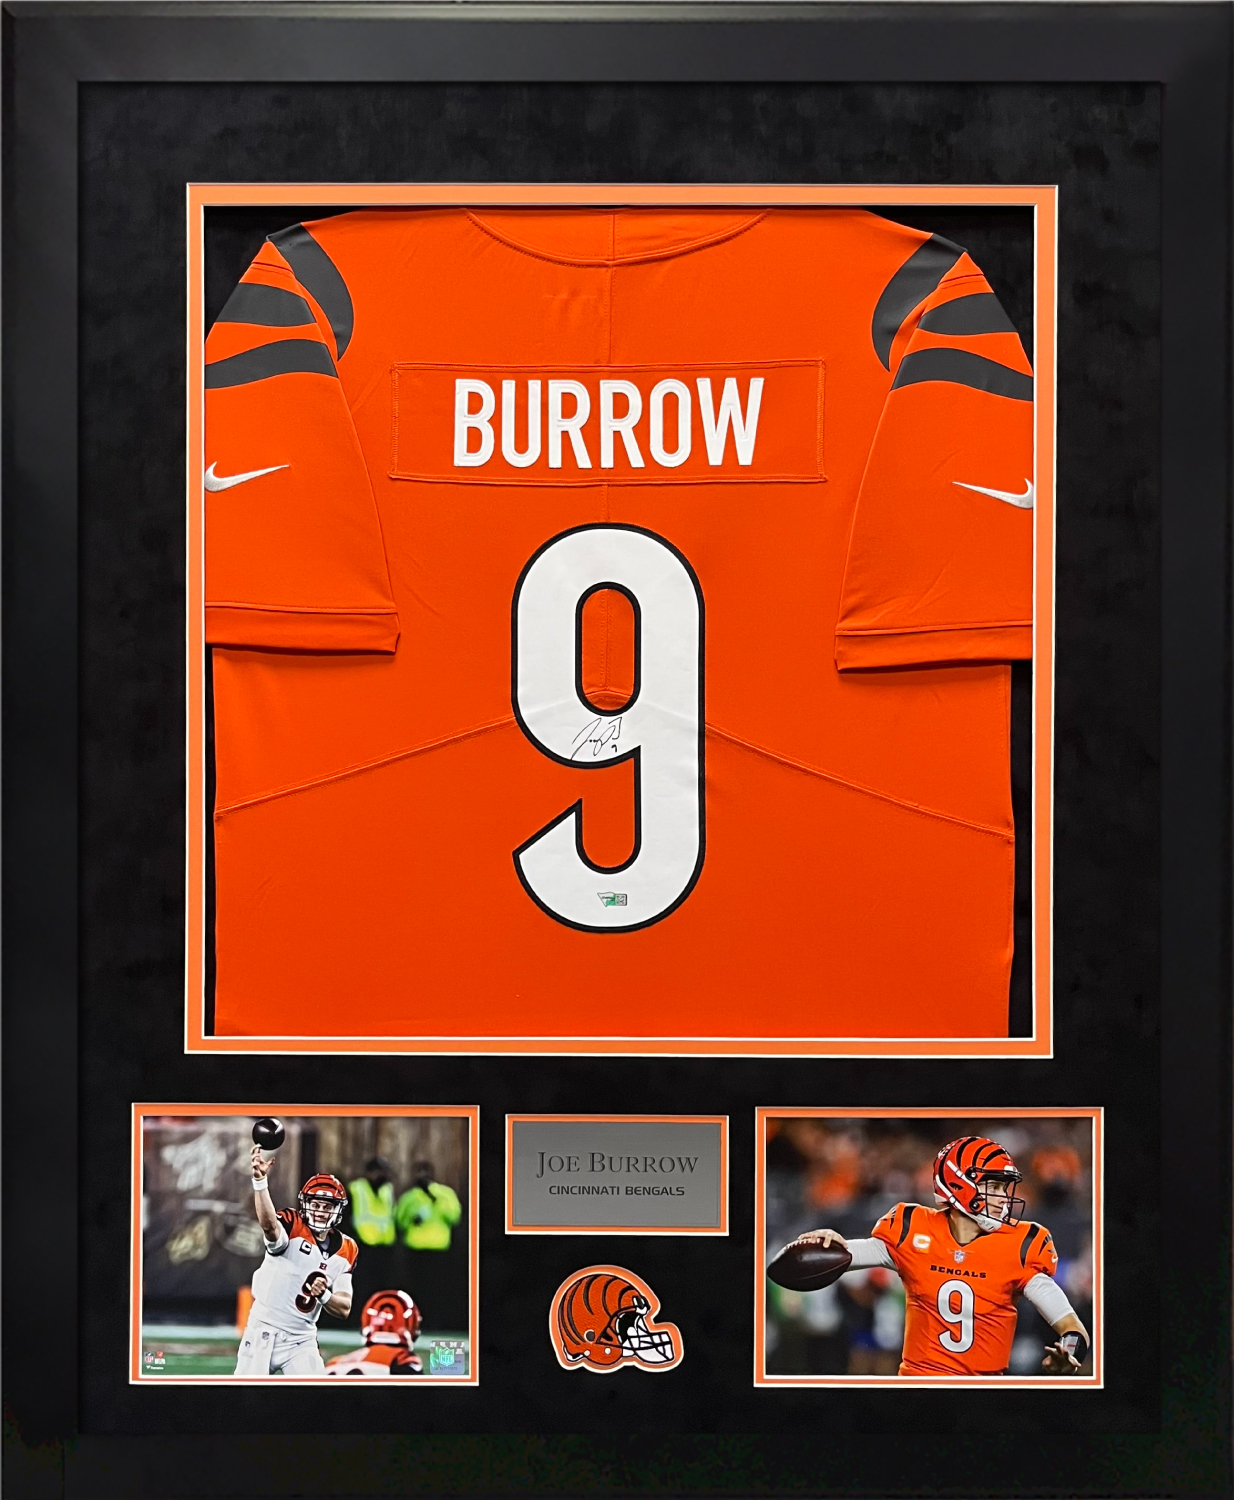 orange burrow jersey